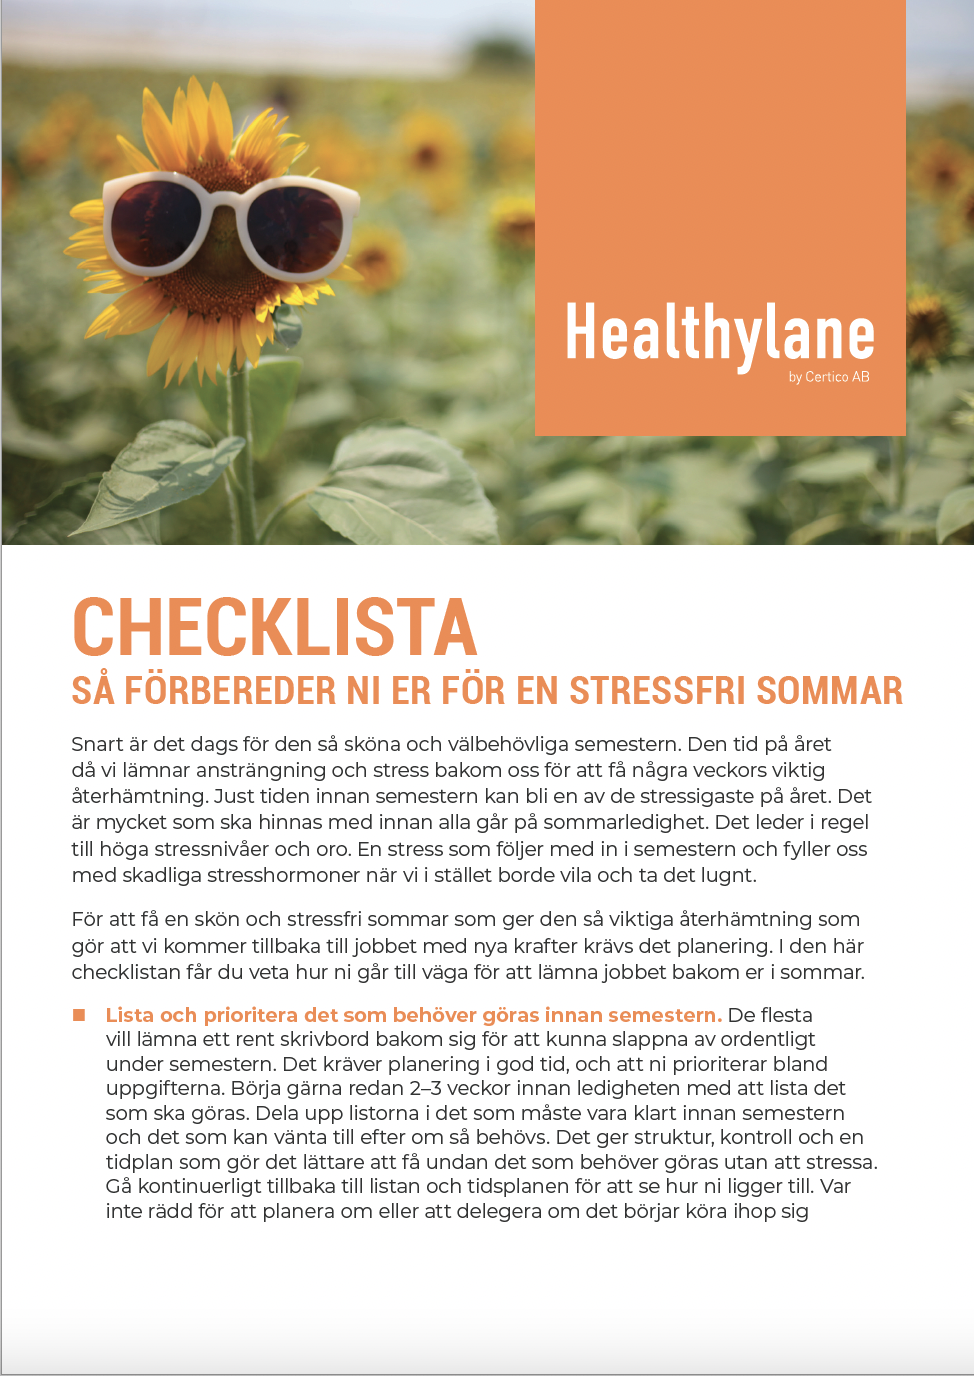 Checklista för en stressfri sommar